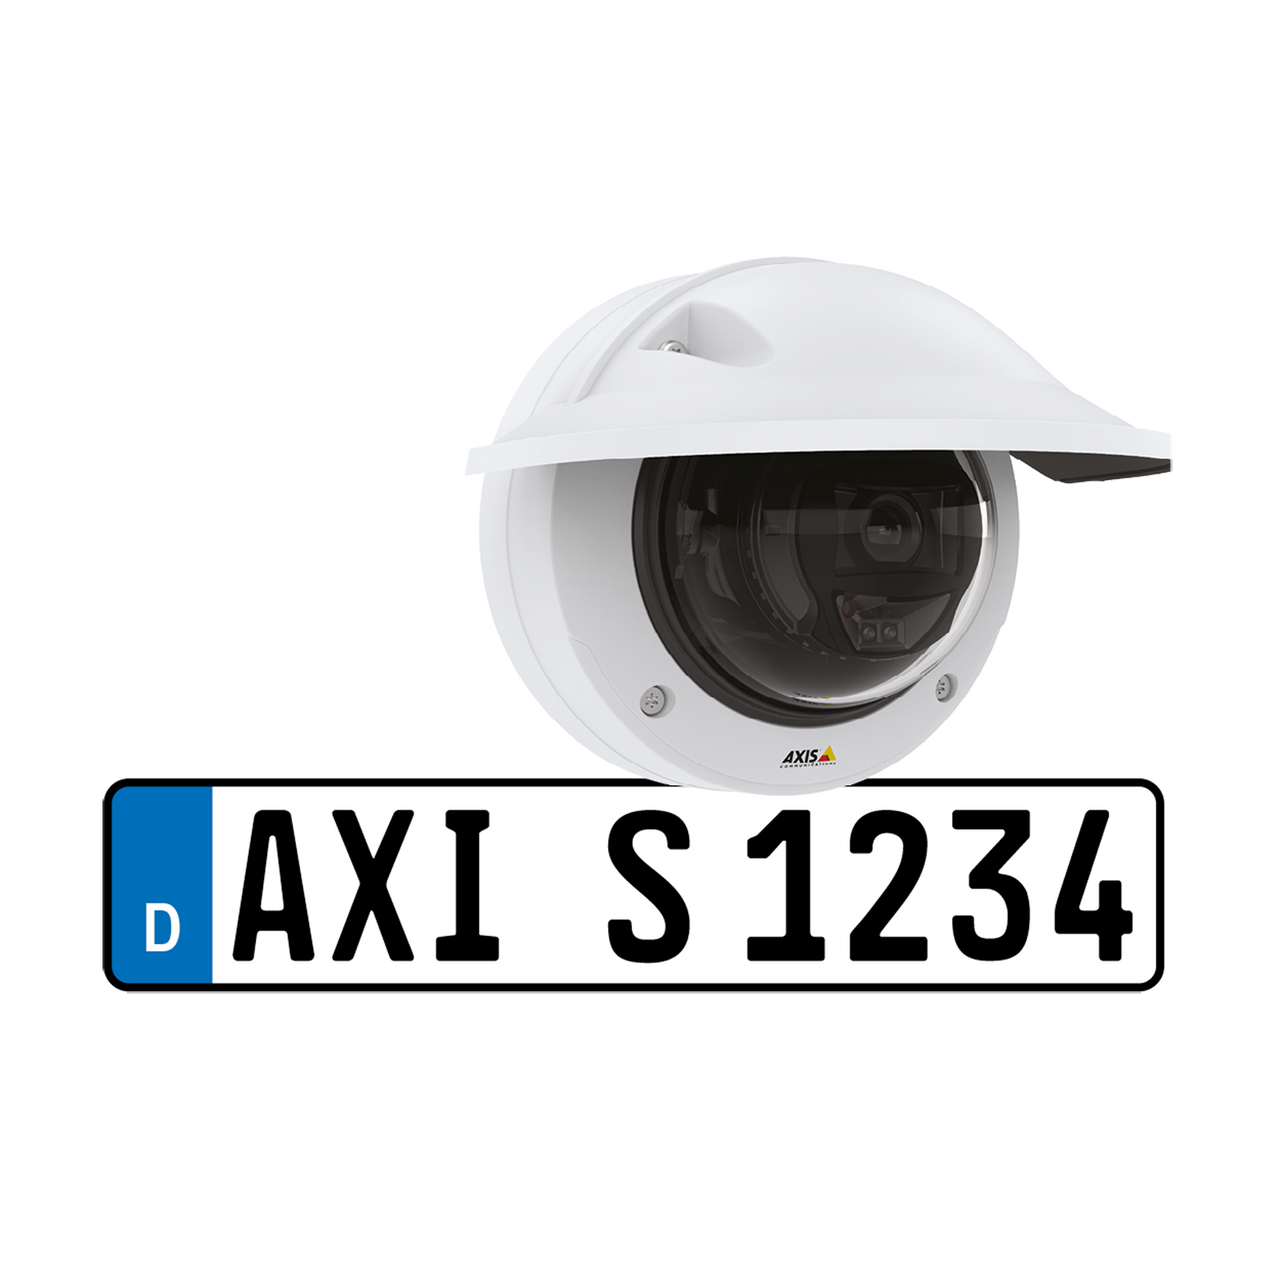 AXIS P3245-LVE-3 L. P. Verifier Kit Easy, cost-effective vehicle access control